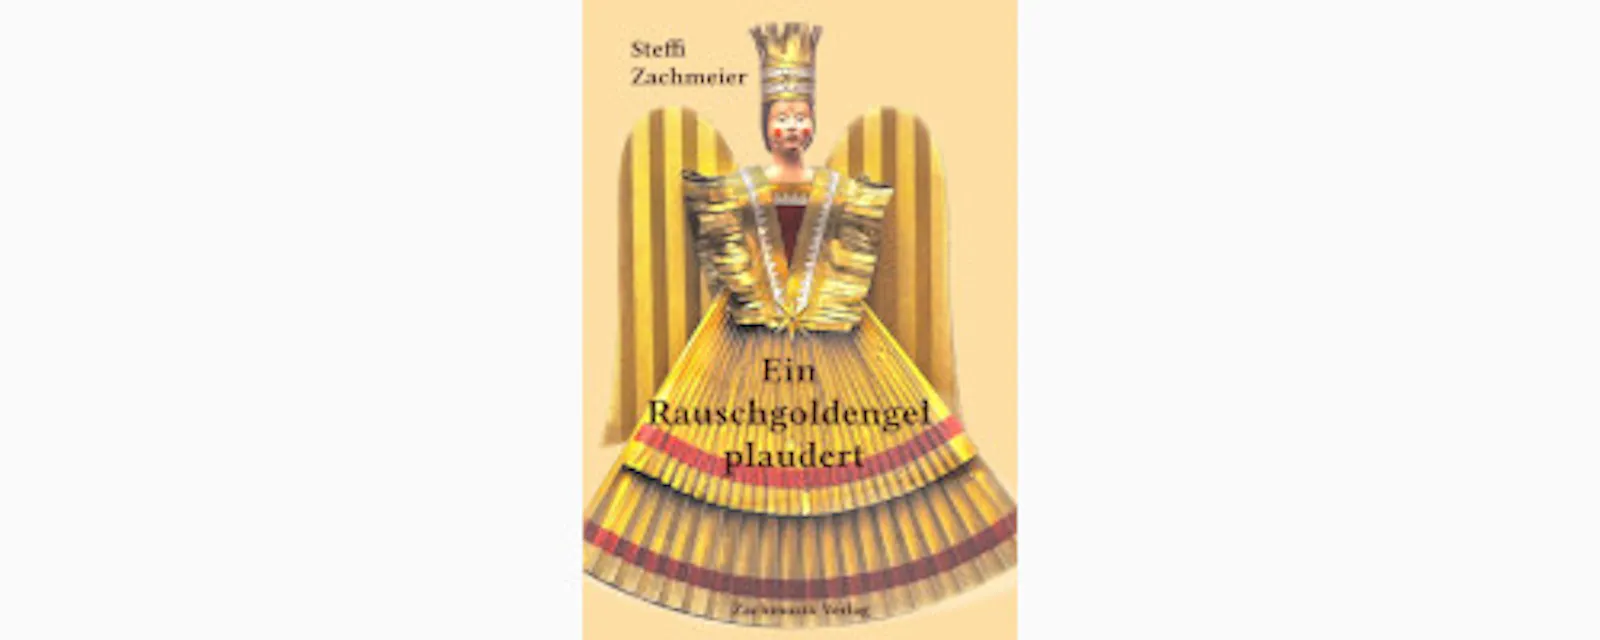 Buchcover: Steffi Zachmeier - Ein Rauschgoldengel plaudert